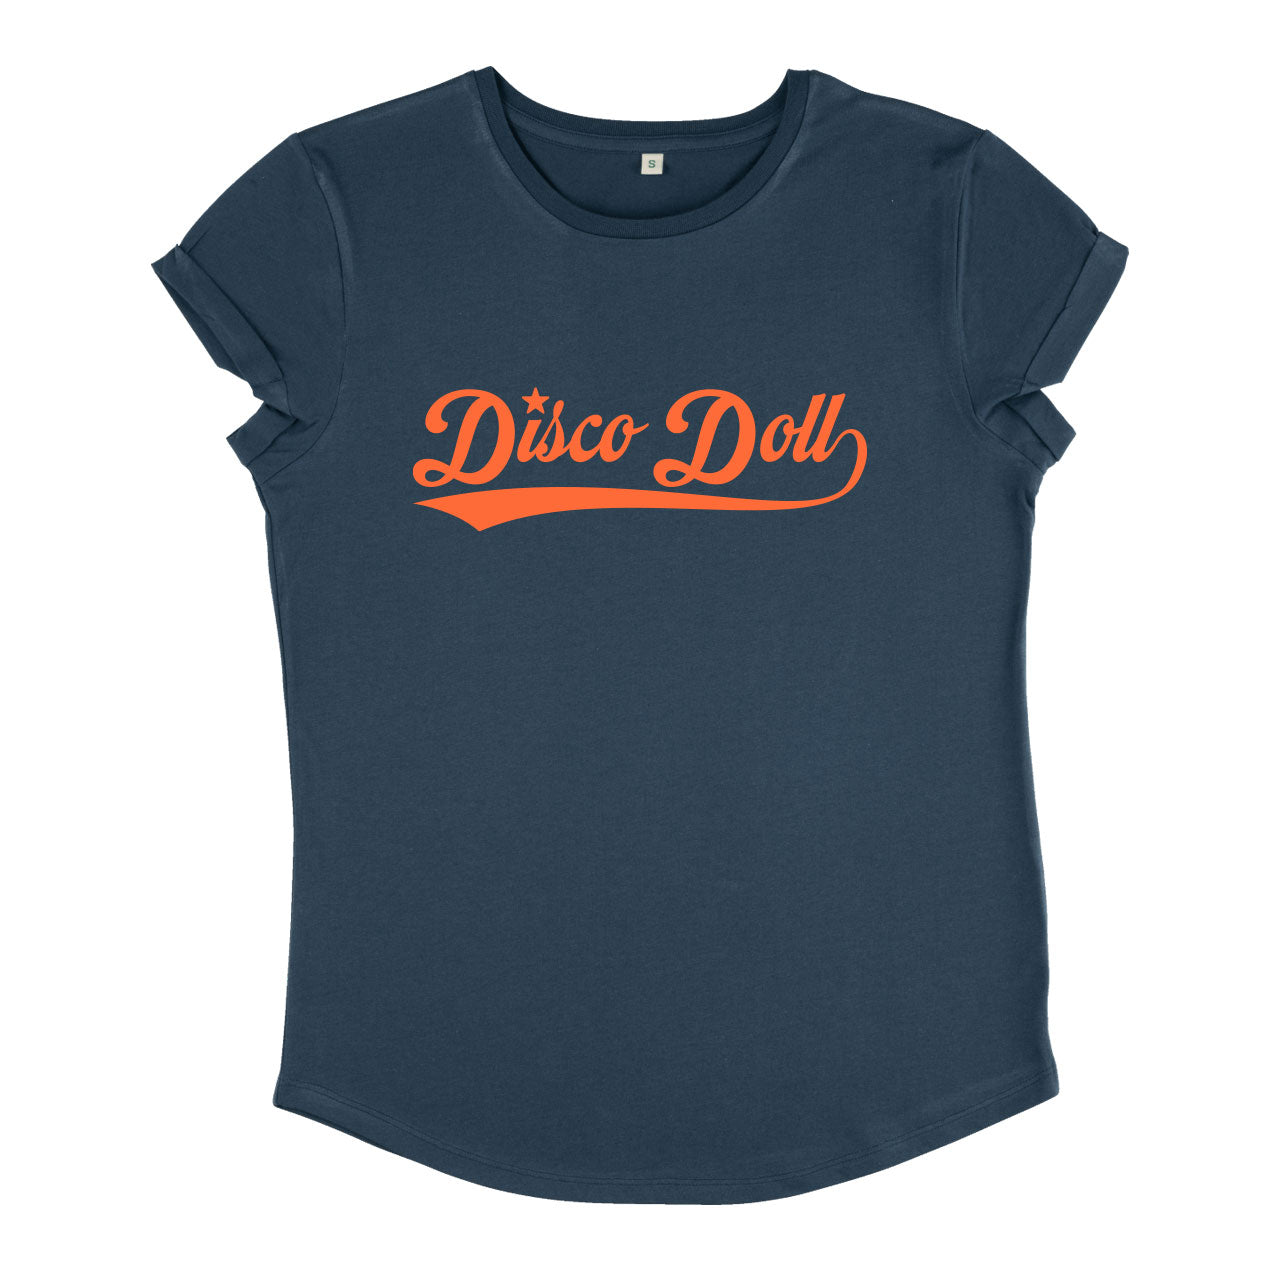 Disco Doll Tee - Petrol Blue - Regular Fit